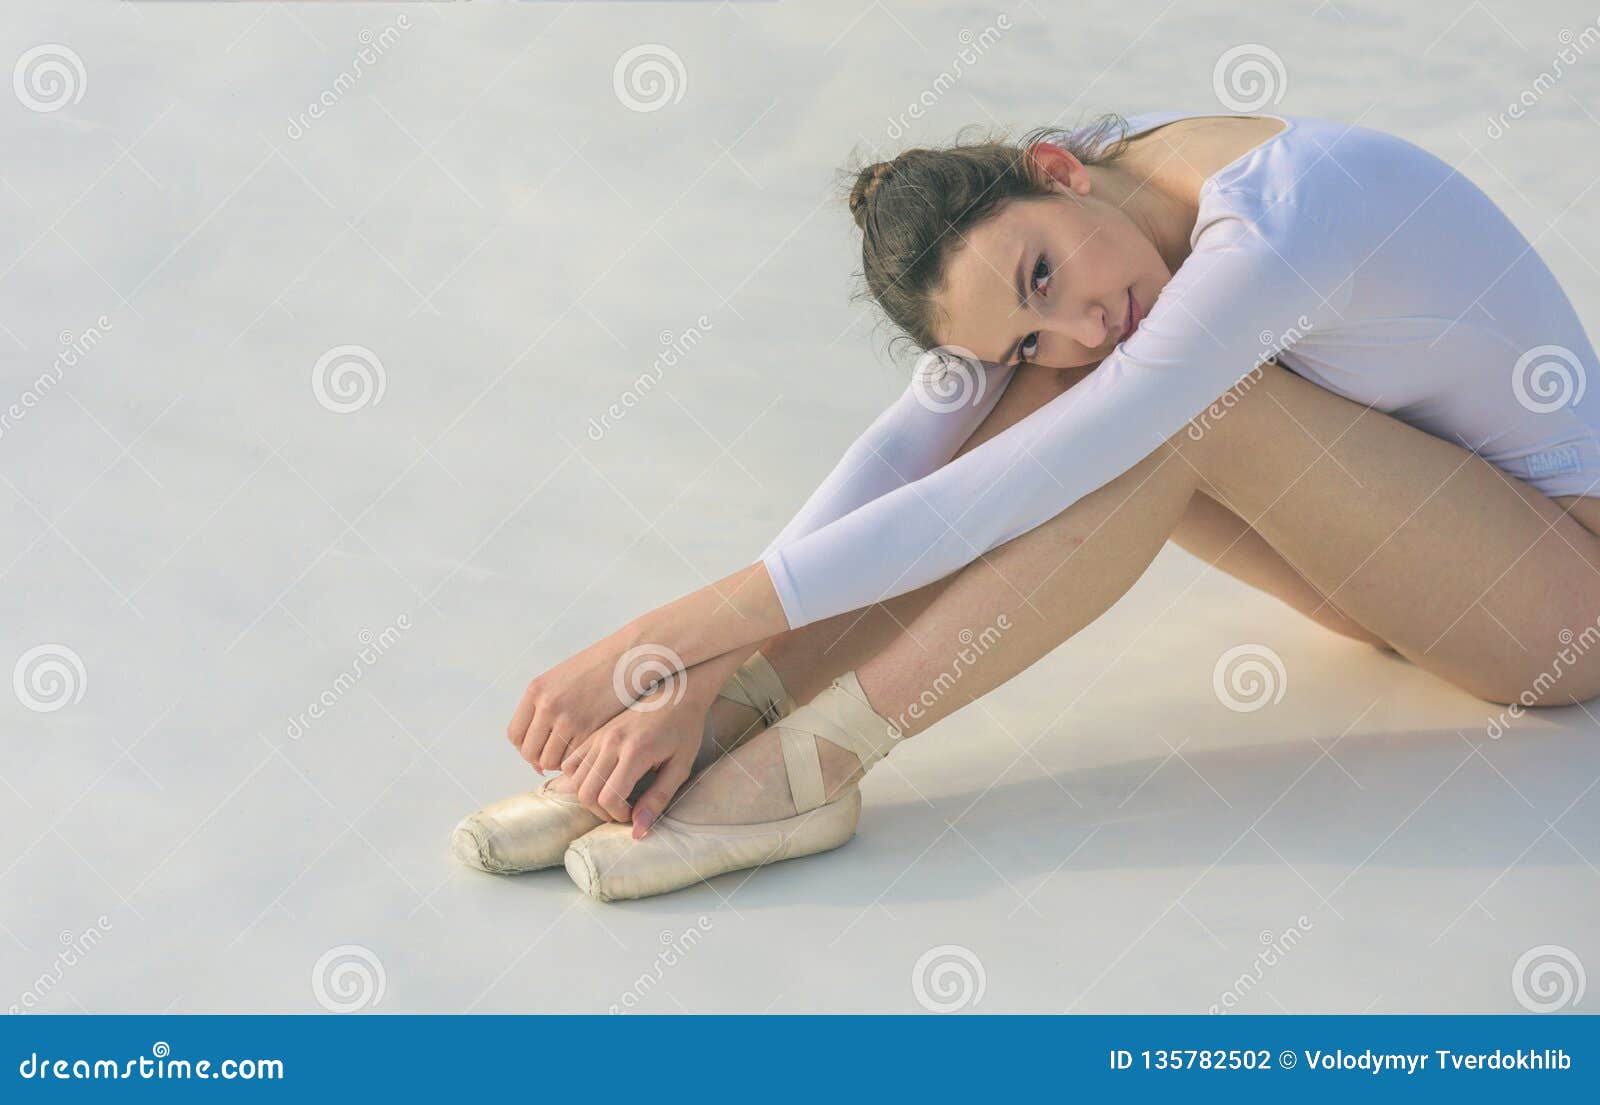 I Need More Practice Young Ballerina Sit On Floor Cute Ballet